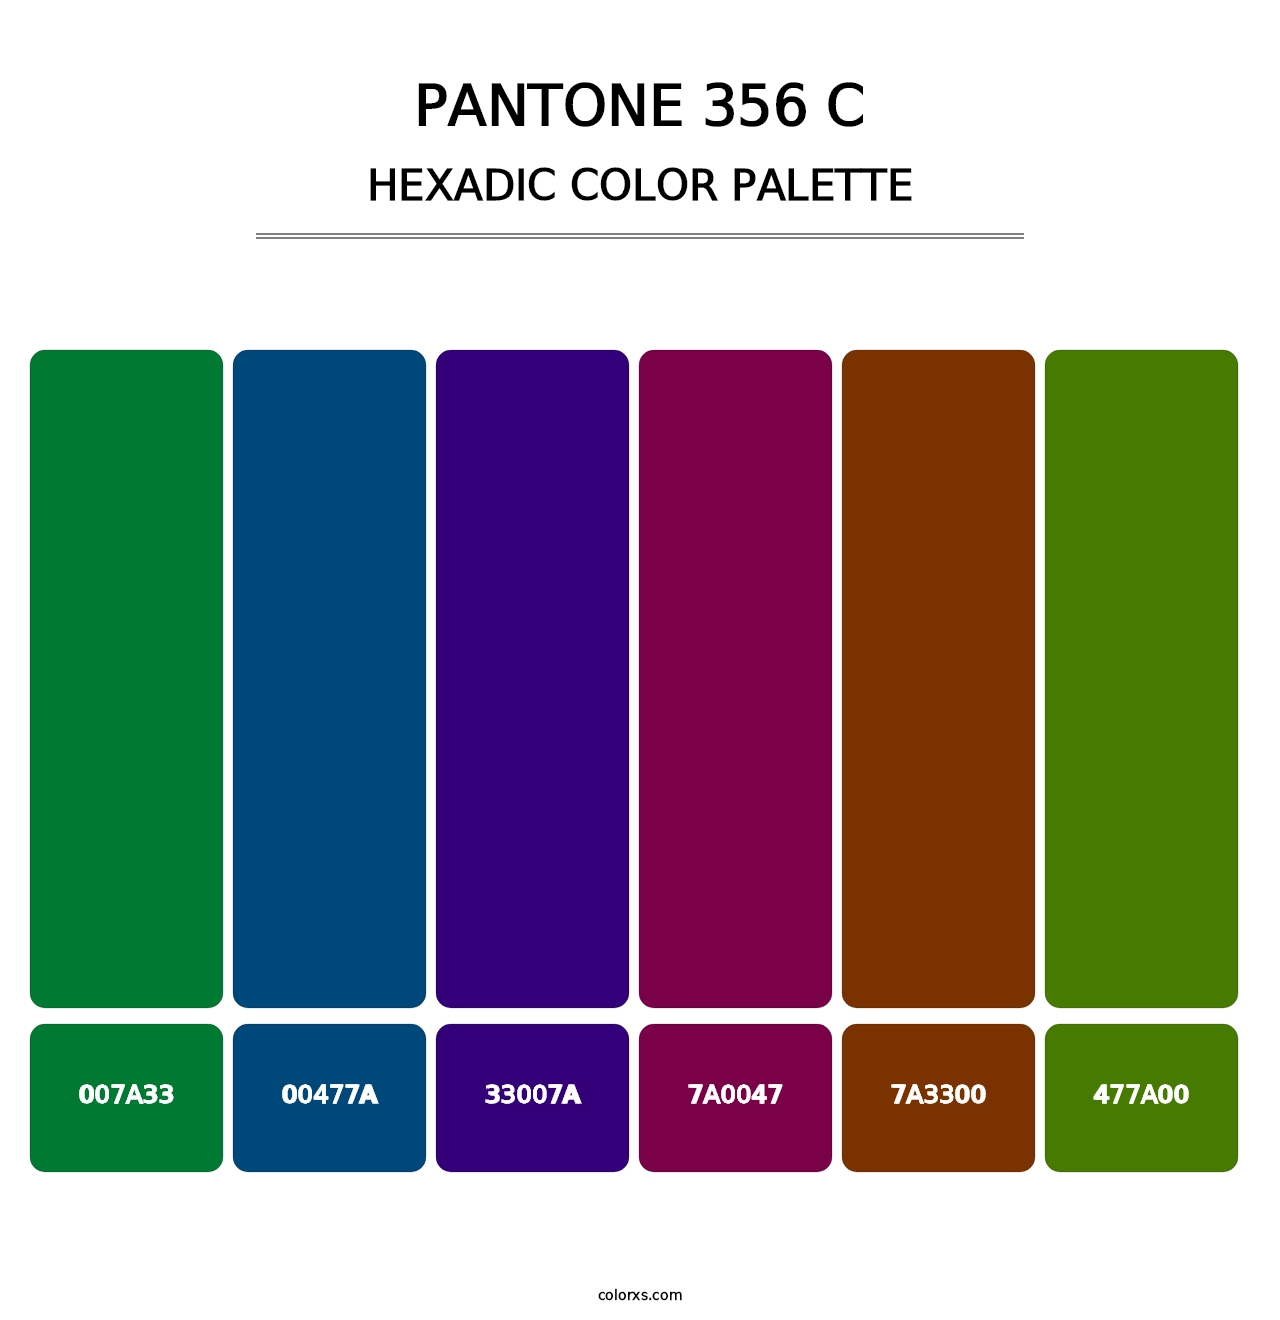 PANTONE 356 C - Hexadic Color Palette